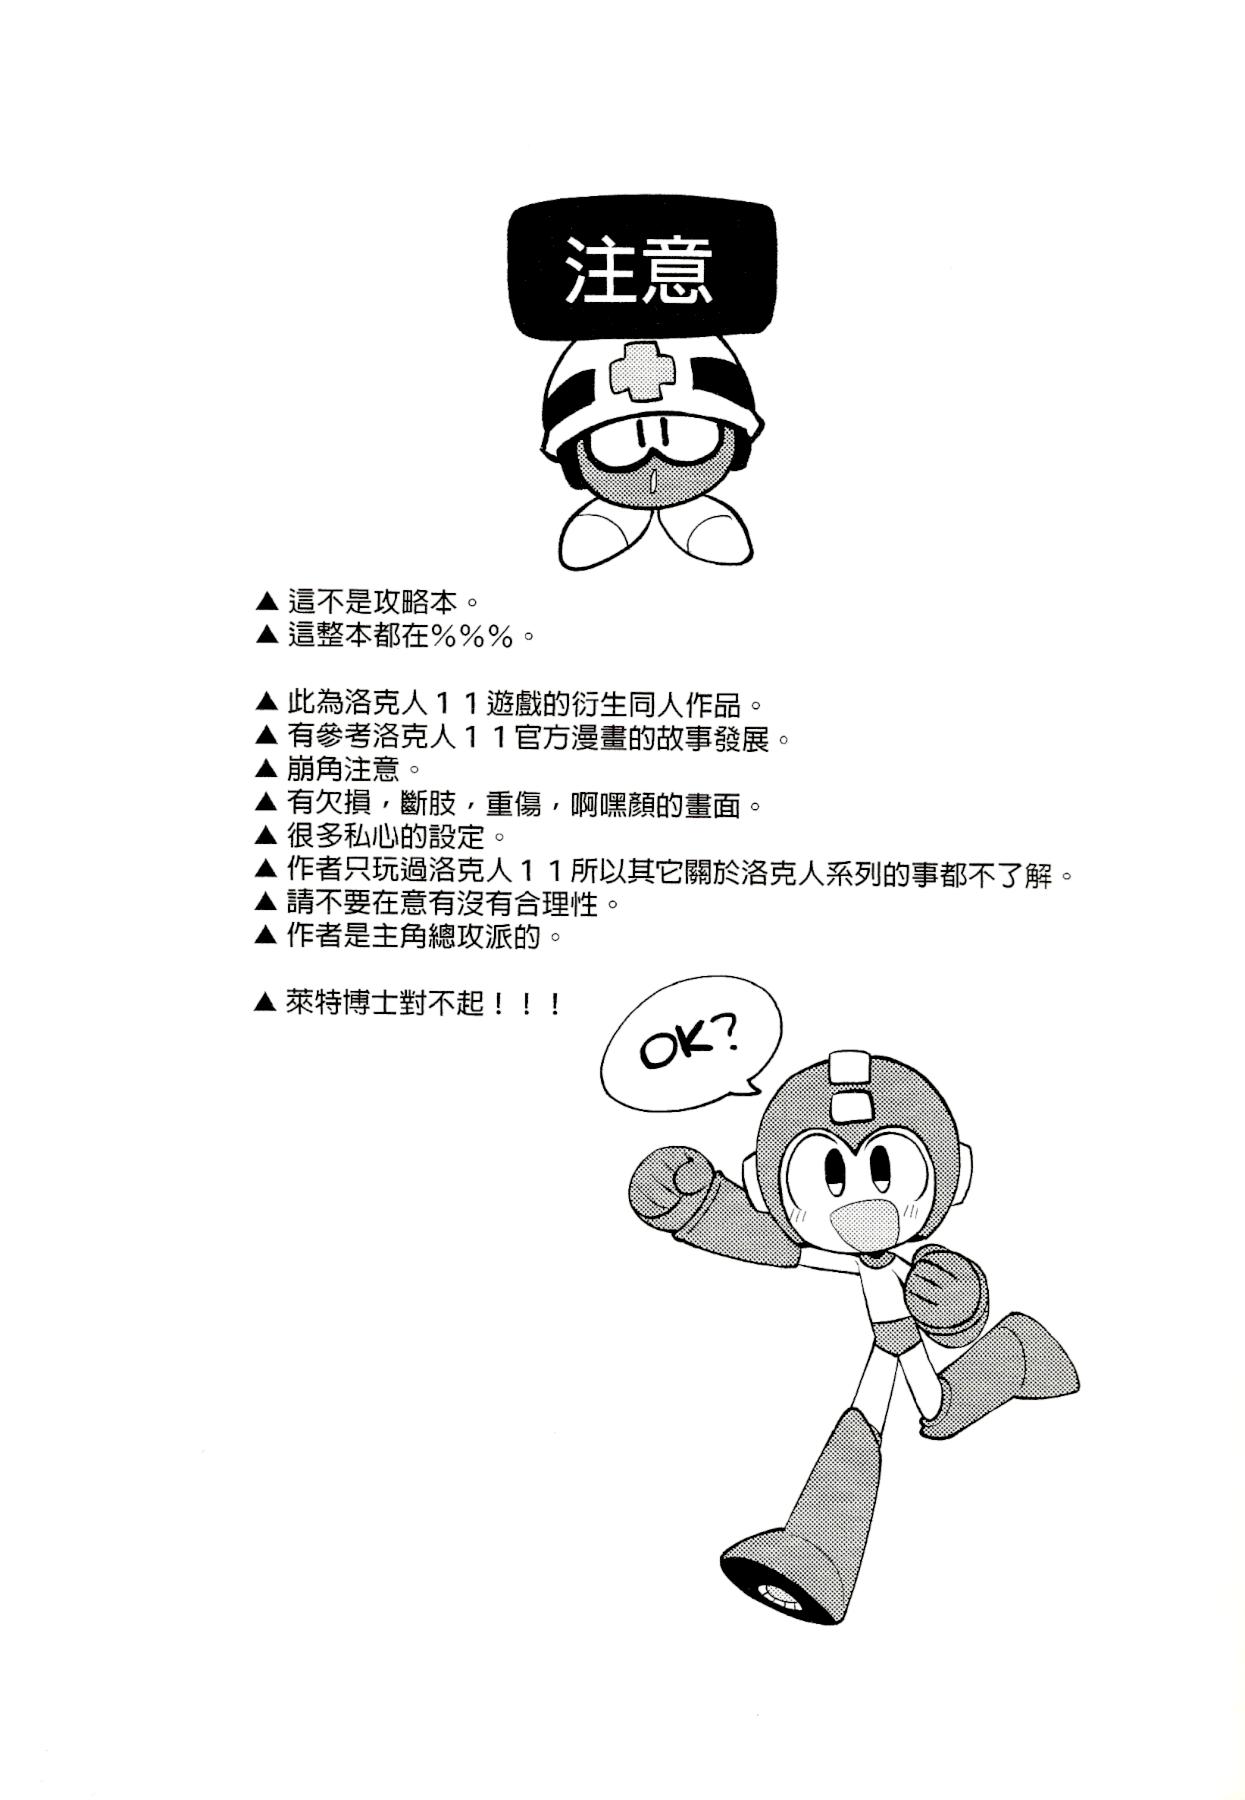 (Finish Prison) Luòkè rén 11-FUSEMAN gōnglüè běn | "Rockman 11-FUSEMAN Raiders" (Mega Man) 1